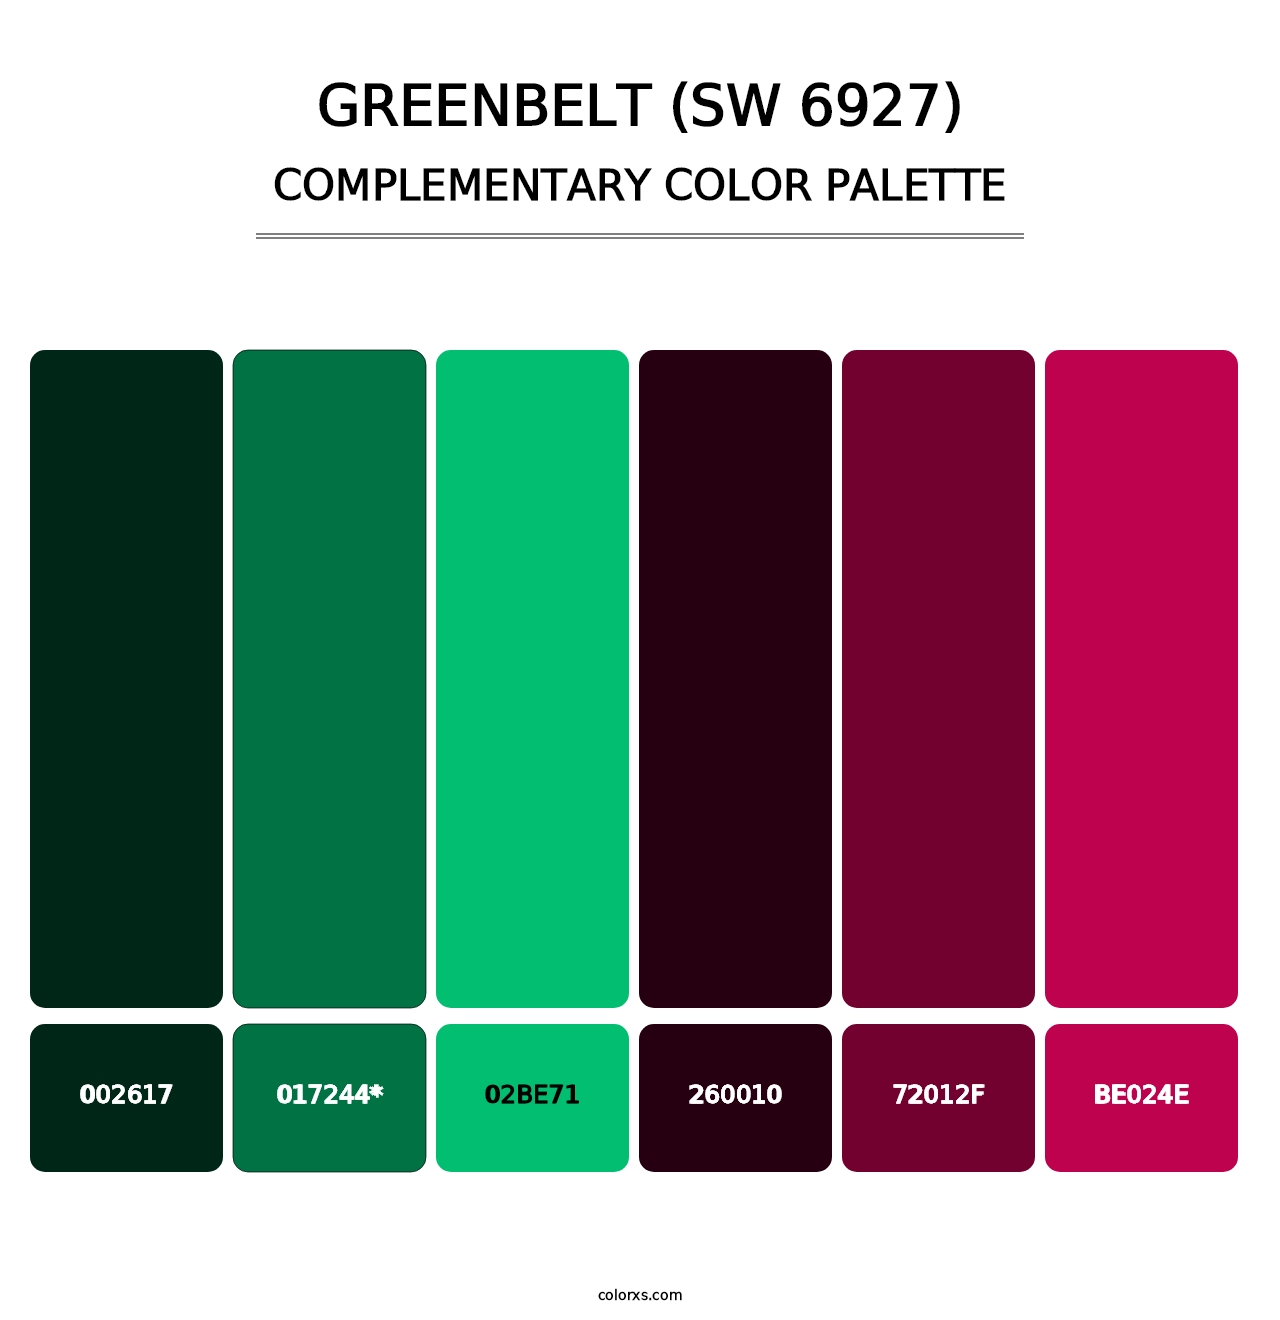 Greenbelt (SW 6927) - Complementary Color Palette